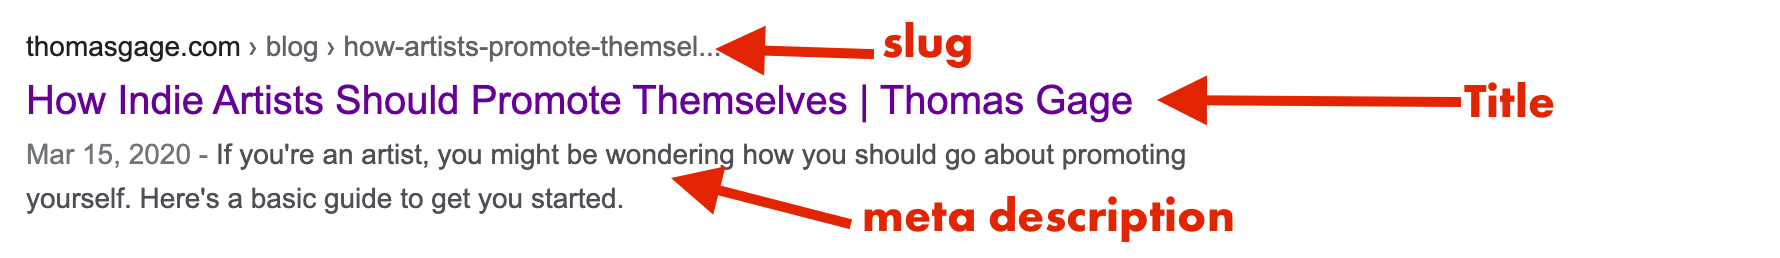 Search result showing important ranking factors: title, meta description and slug